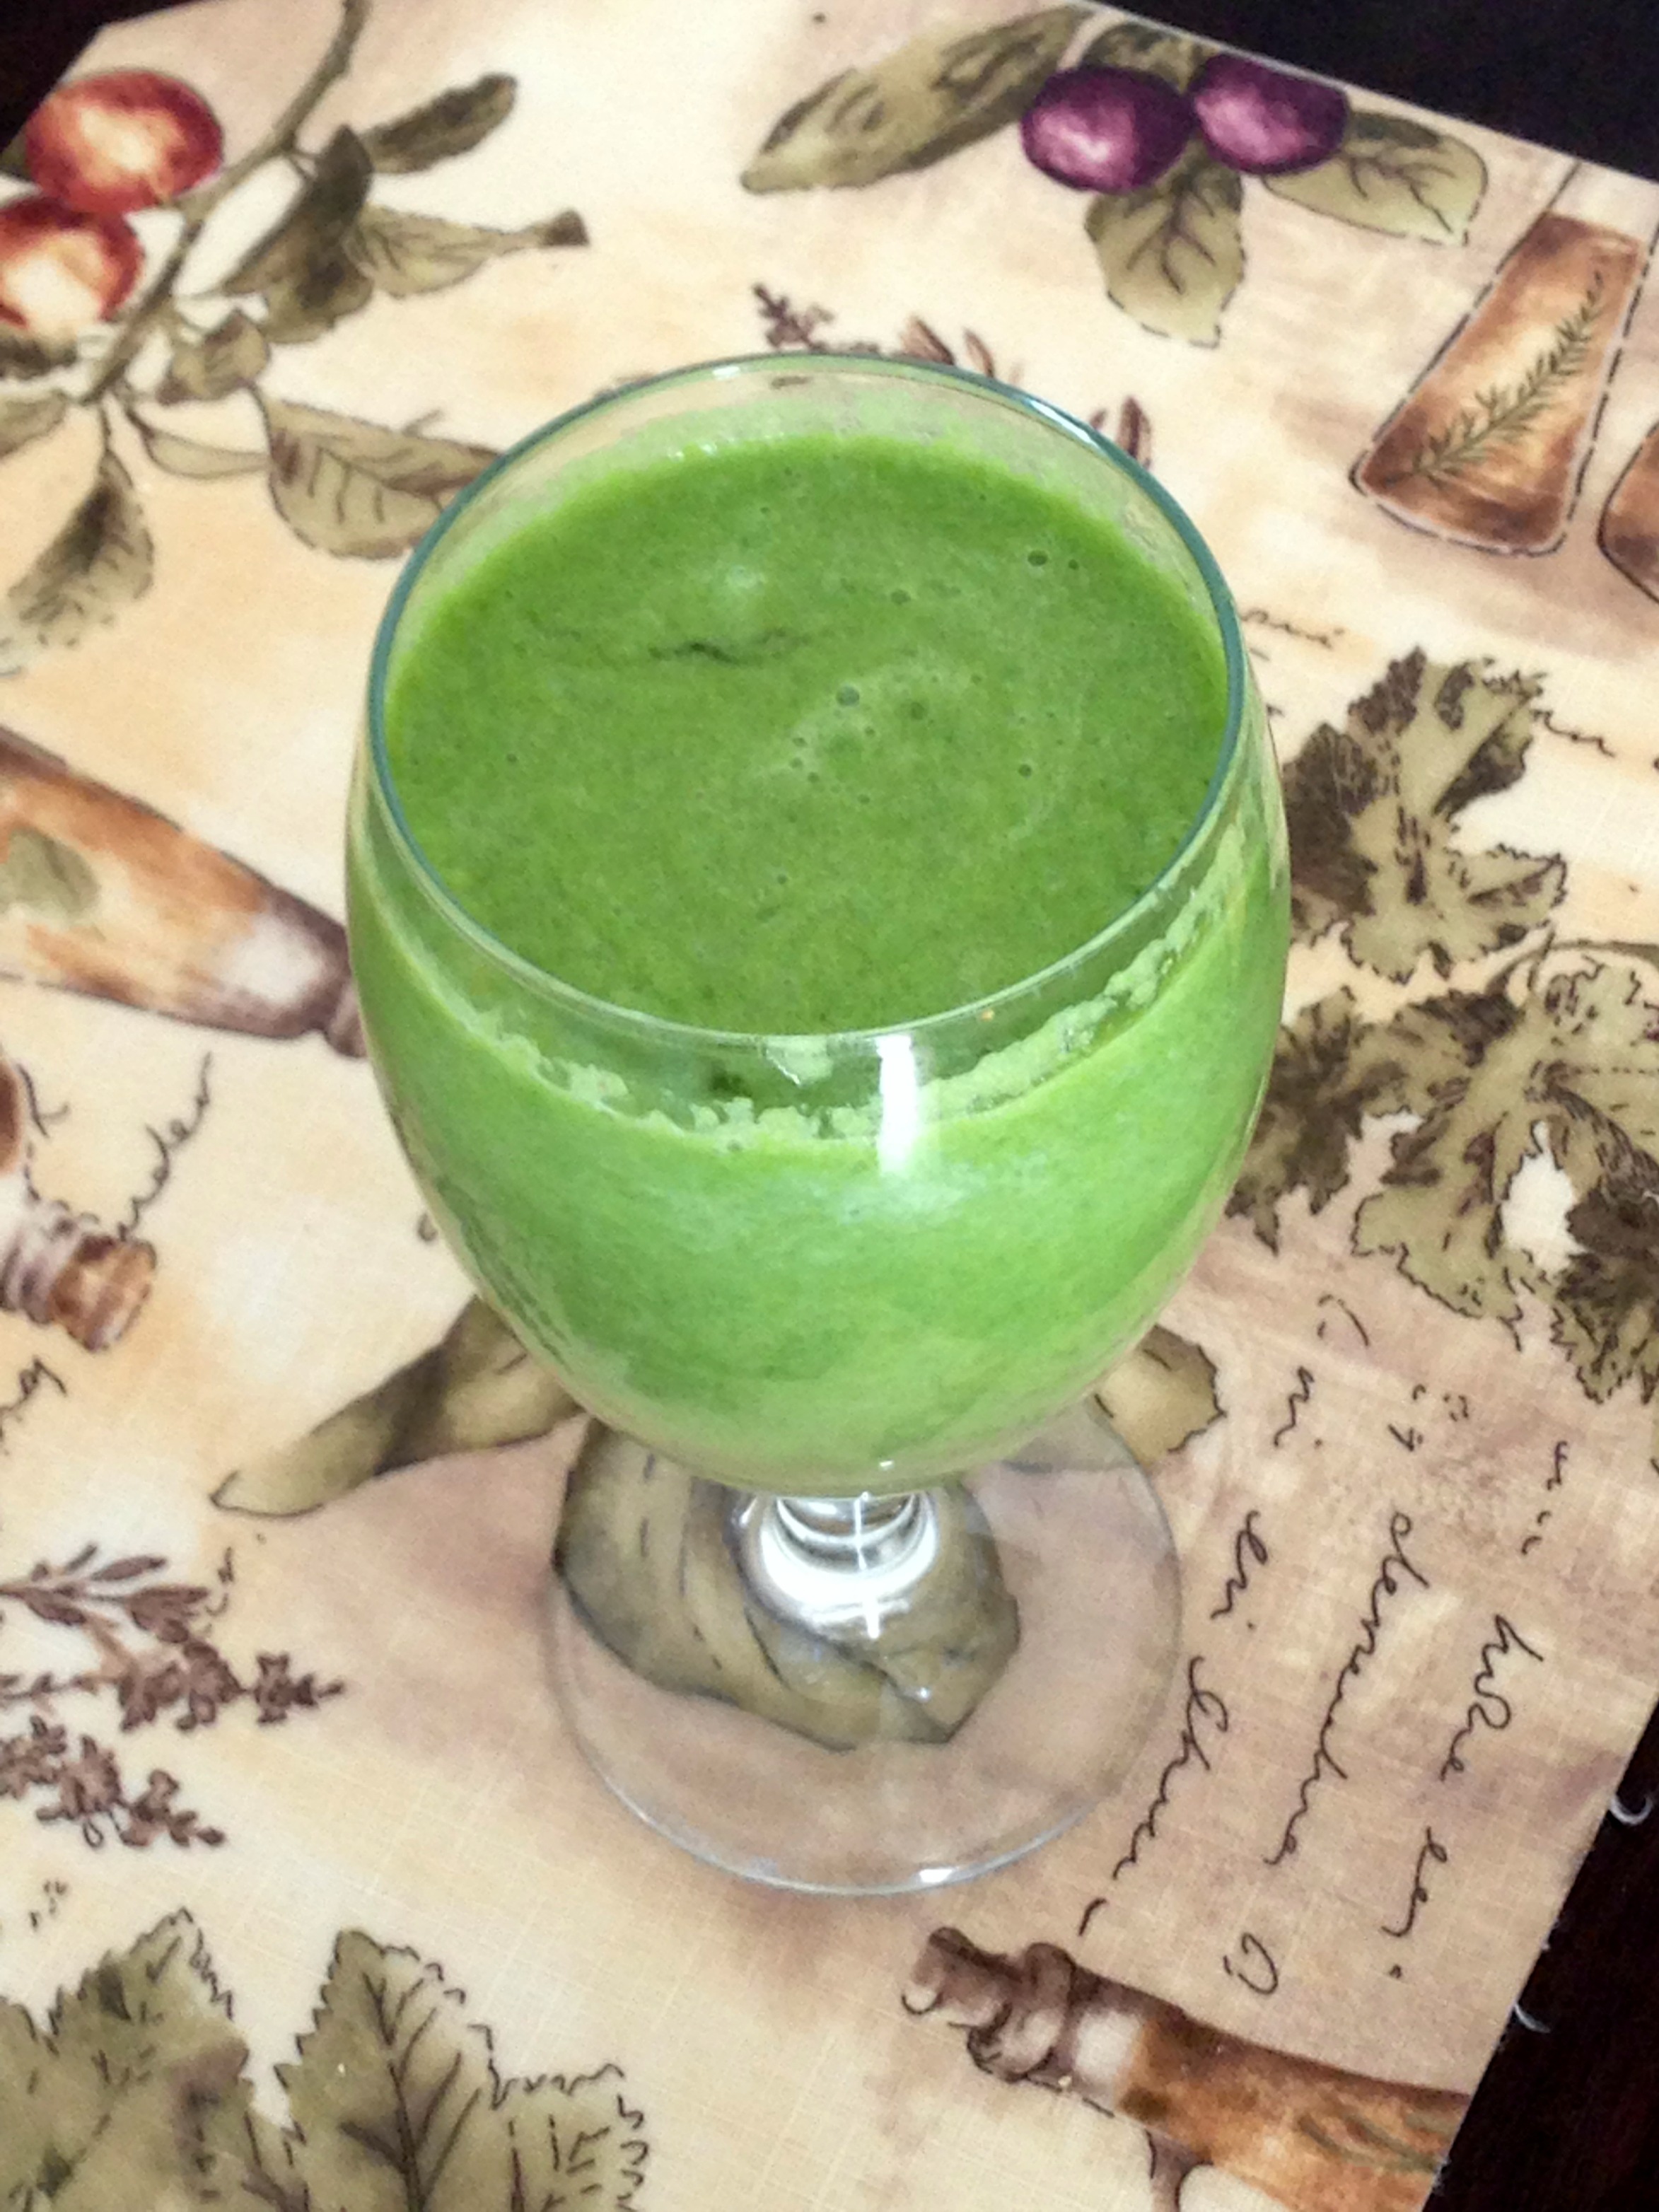 My New Favorite Juice: Minty Green Monster Lemonade